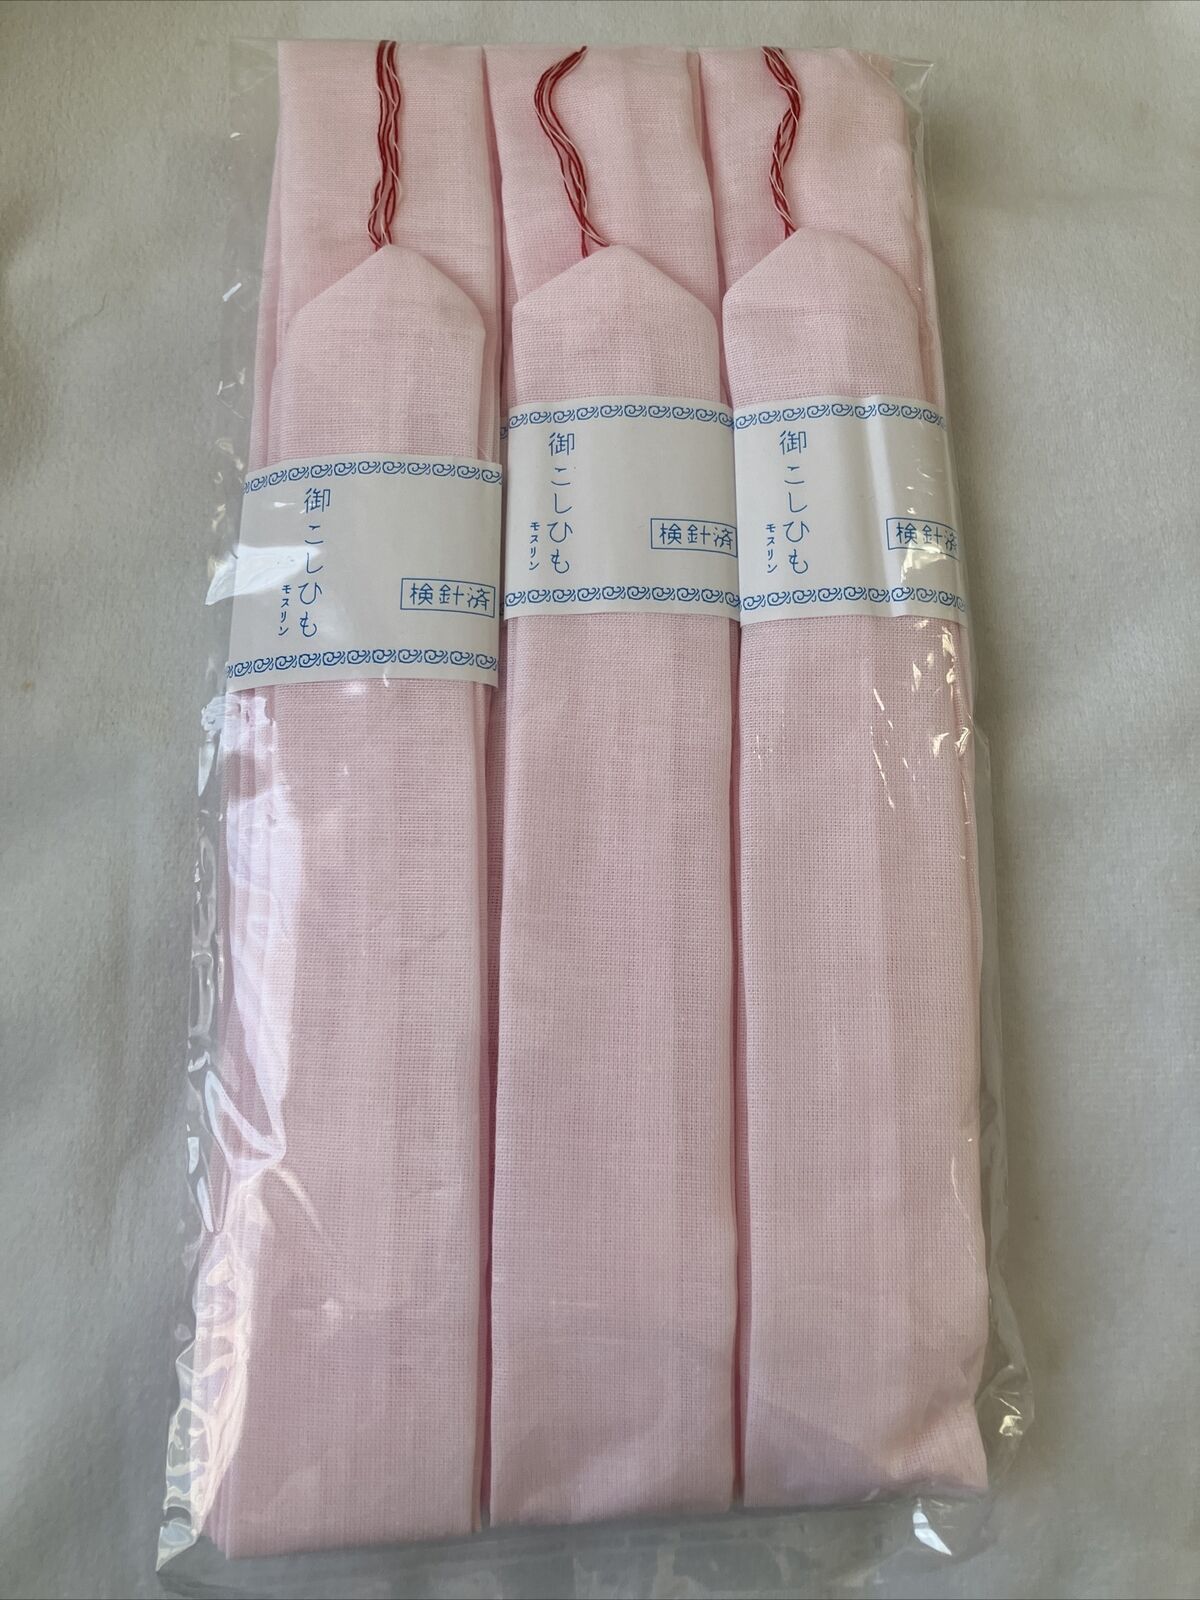 Kimono Kitsuke koshi himo belt 3 belts moslin Pink cotton